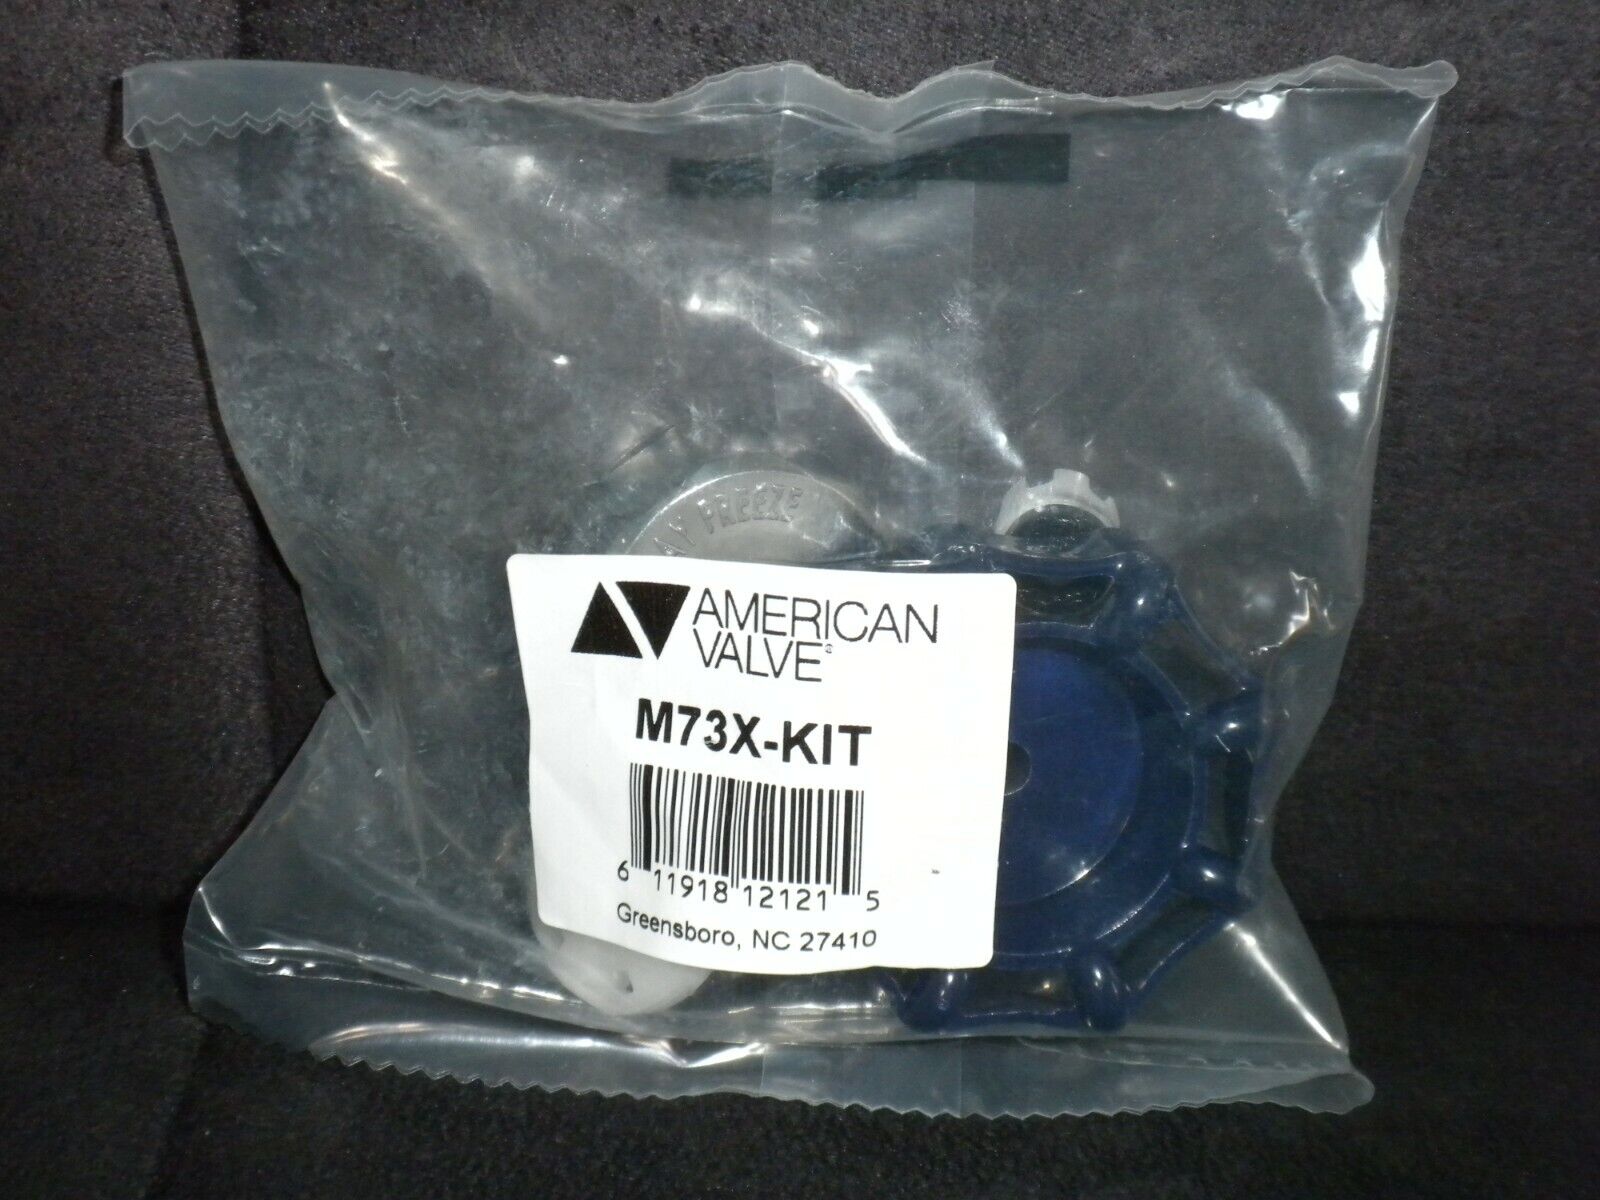 American Valve #M72AS-HASK Sillcock Valve Hose Bib Repair Kit / Now Kit #M73X